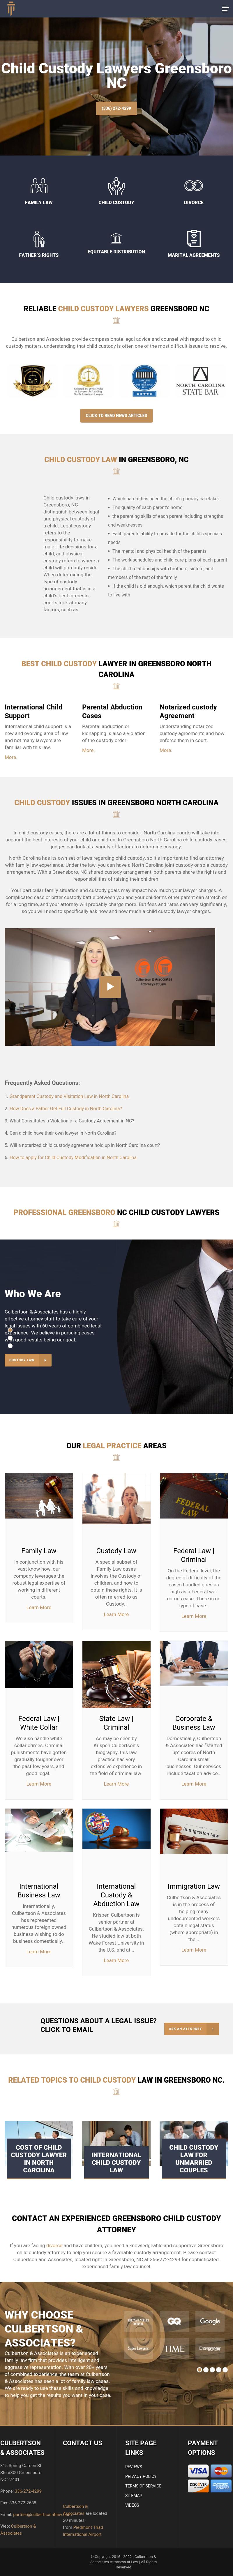 Culbertson & Associates - Greensboro NC Lawyers